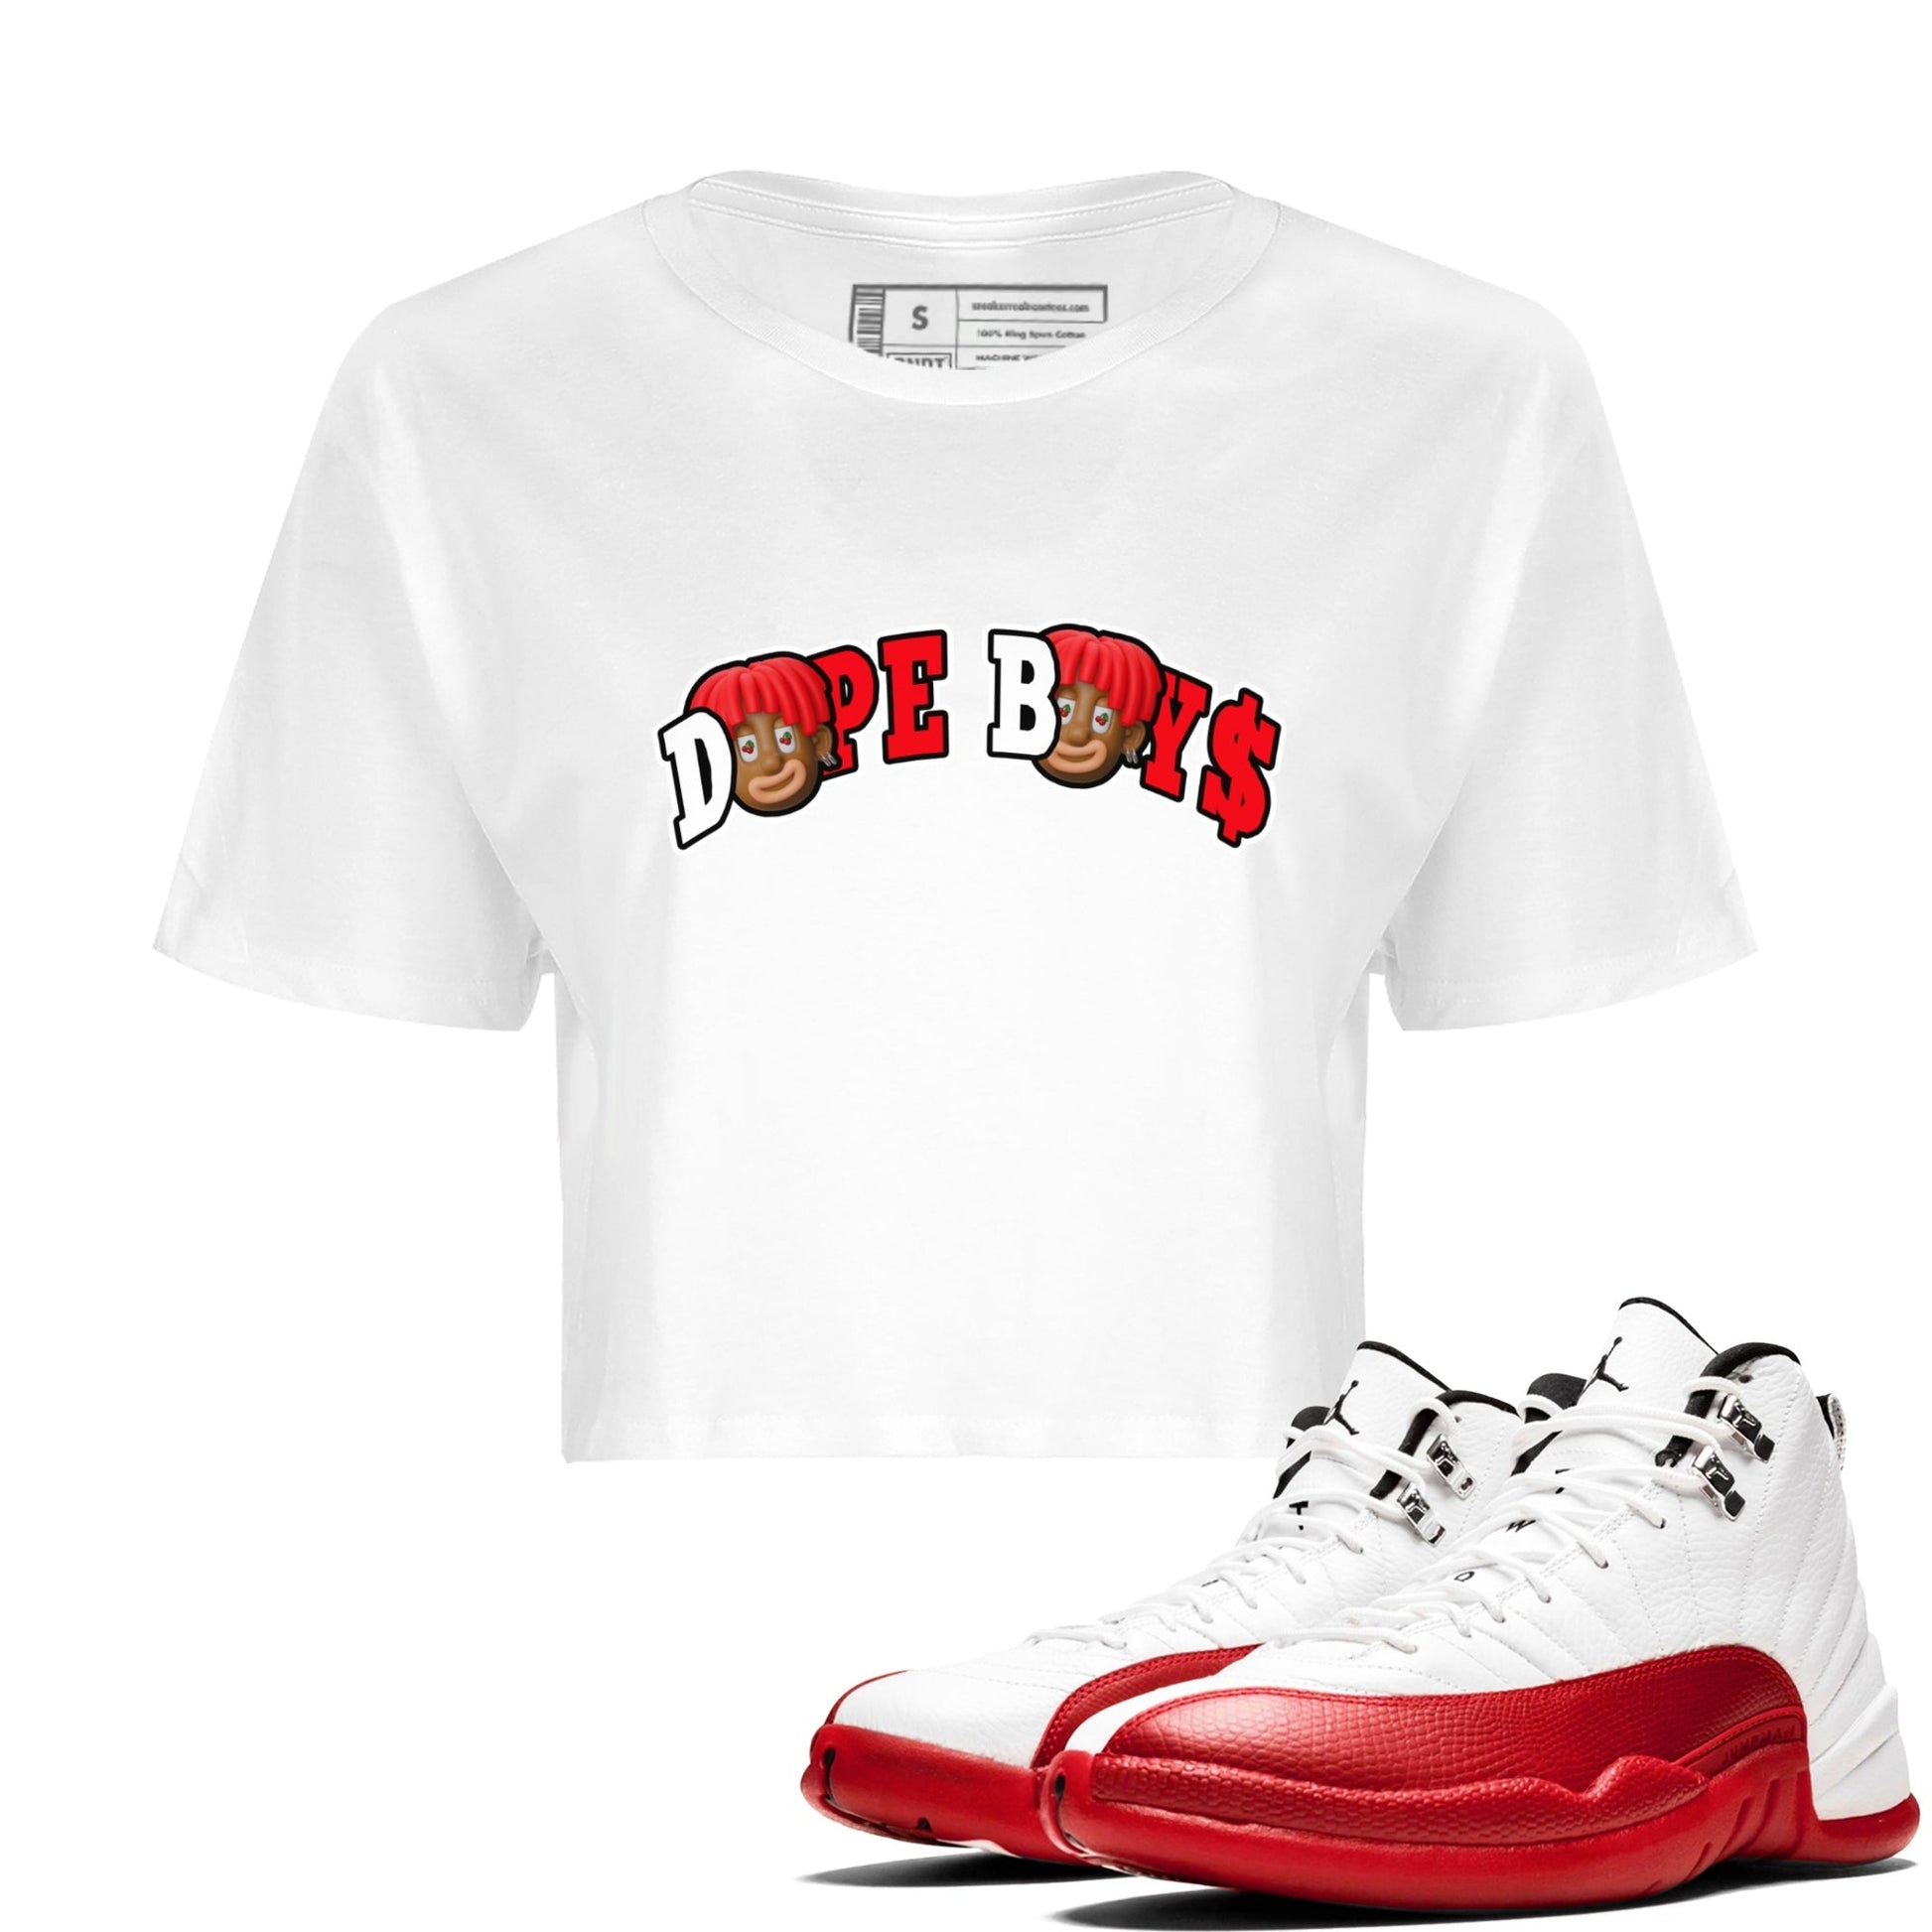 Air Jordan 12 Cherry Sneaker Match Tees Dope Boys Streetwear Sneaker Shirt AJ12 Cherry Sneaker Release Tees Women's Shirts White 1